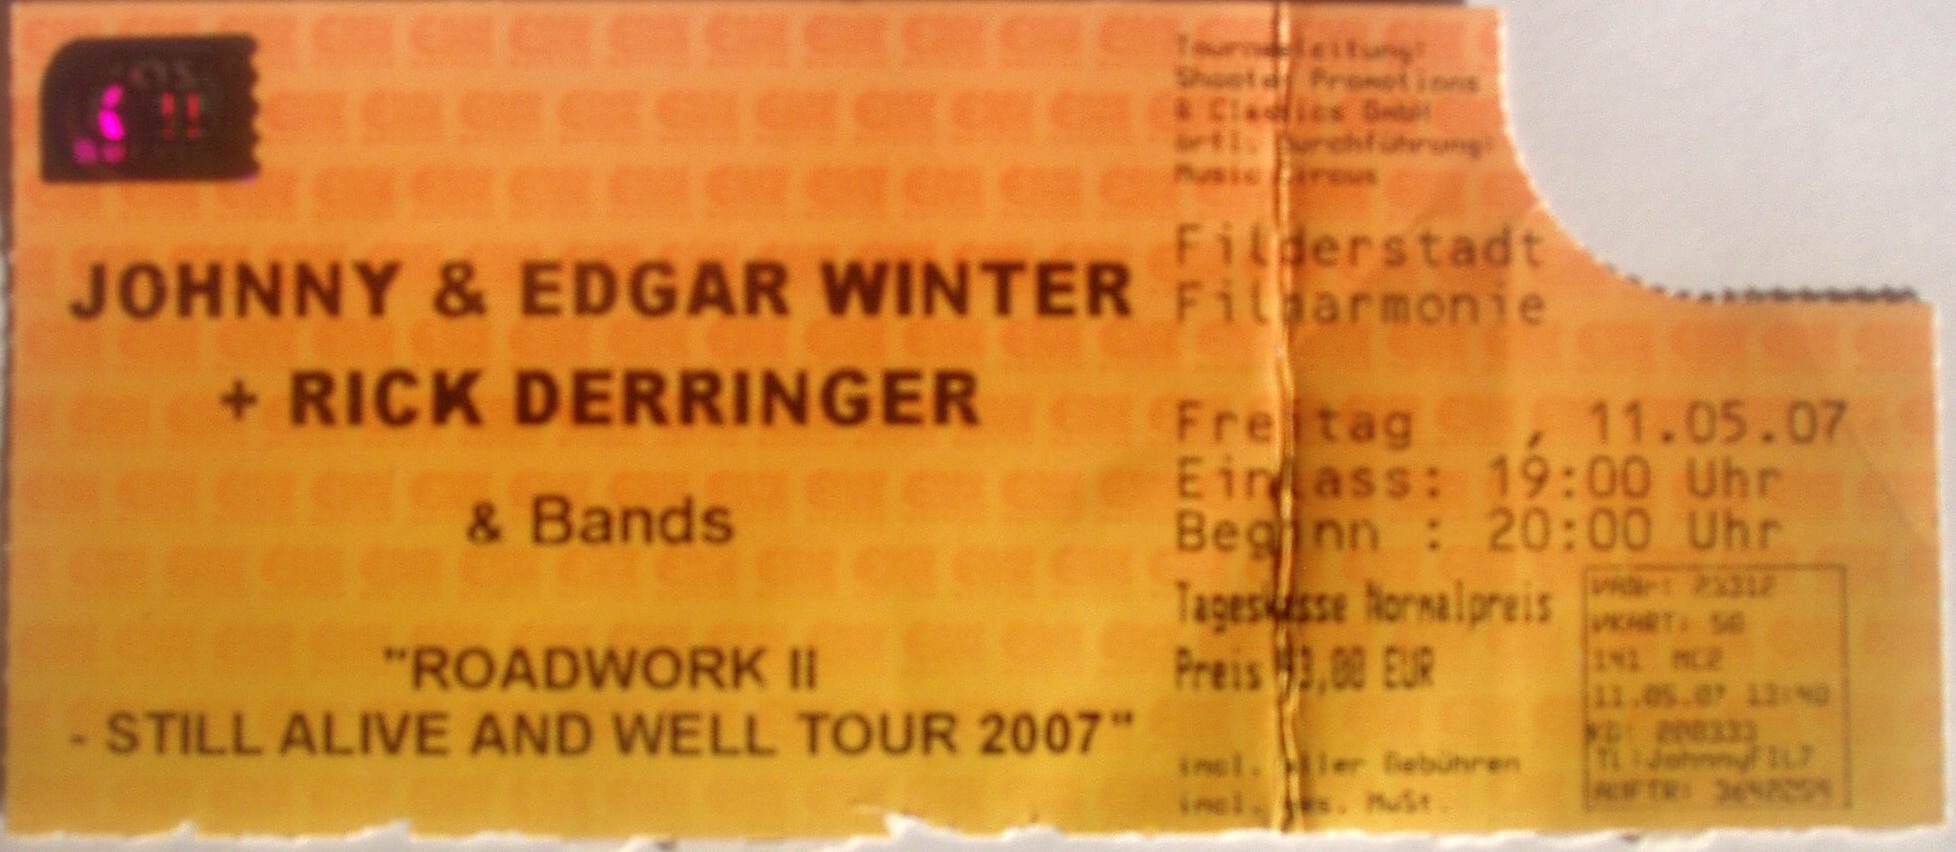 JohnnyWinterEdgarWinterRickDerringer2007-05-11FilharmonieFilderstadtGermany (1).JPG